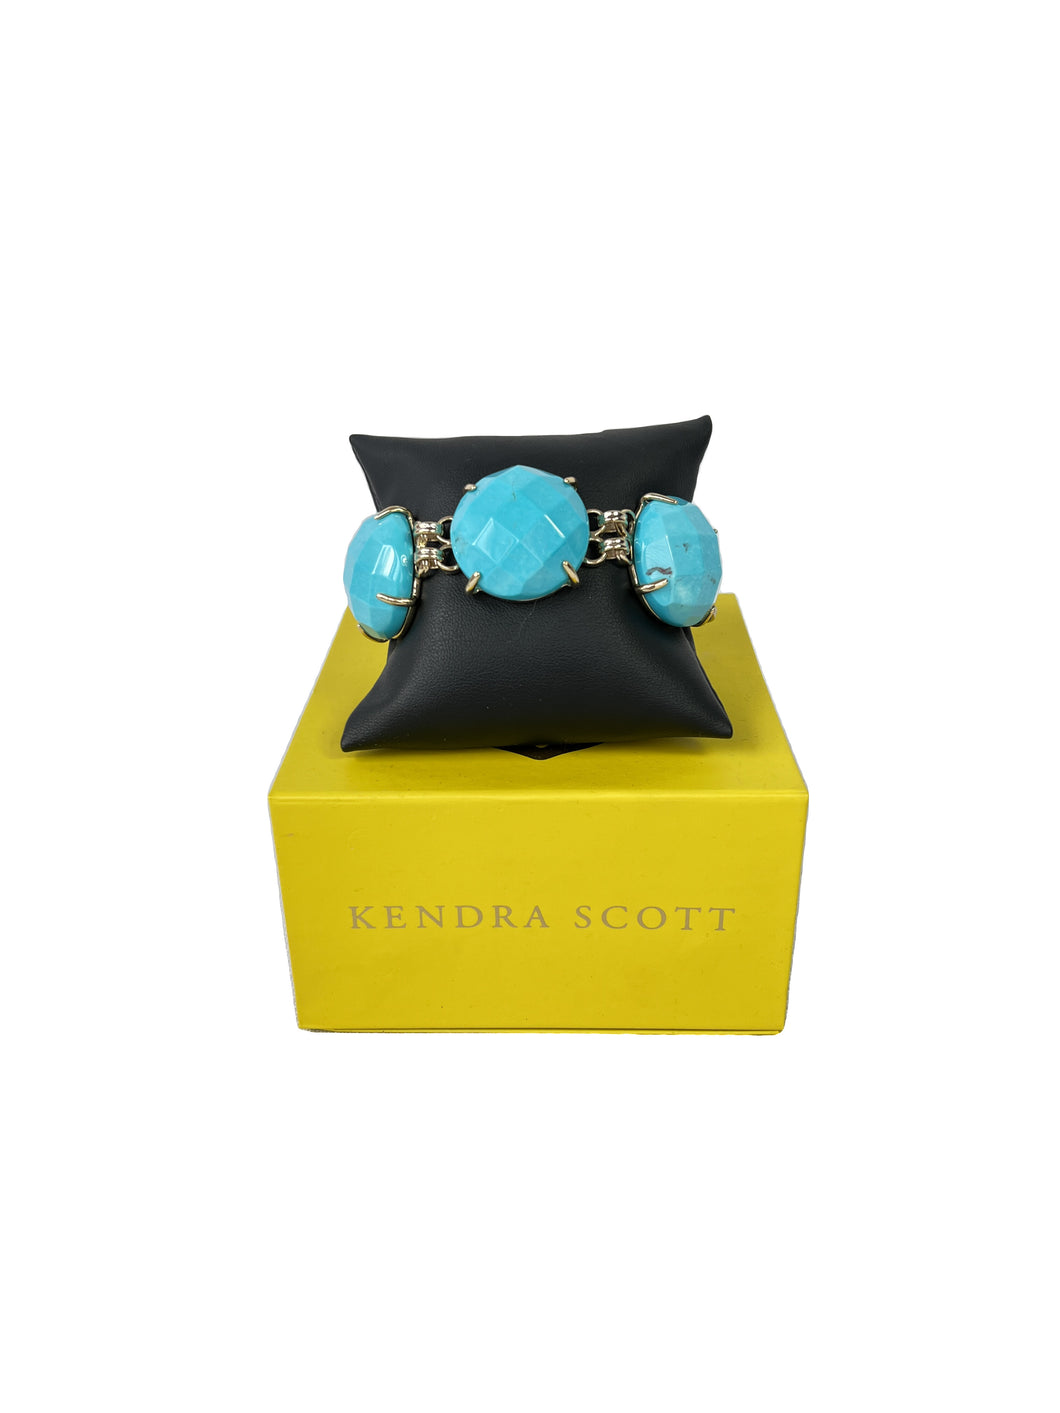 Kendra Scott Cassie five stone turquoise bracelet